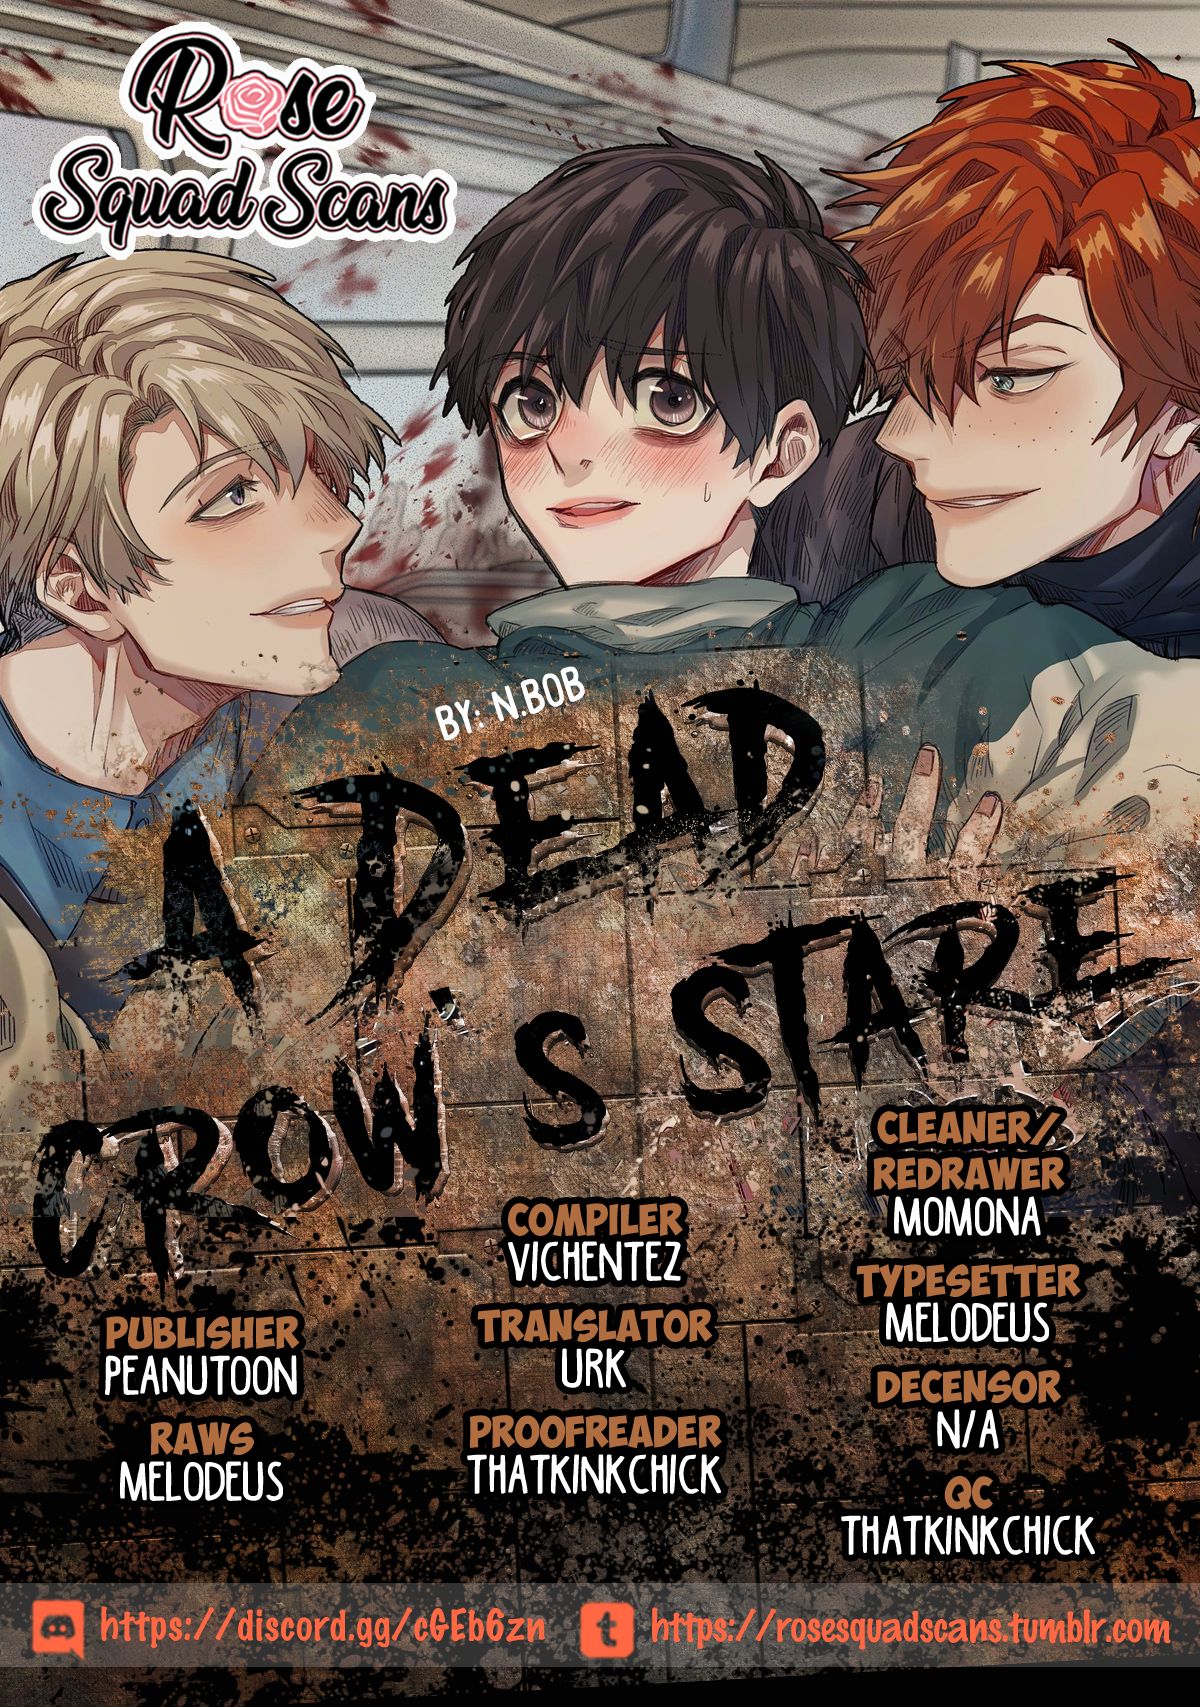 read crows zero manga